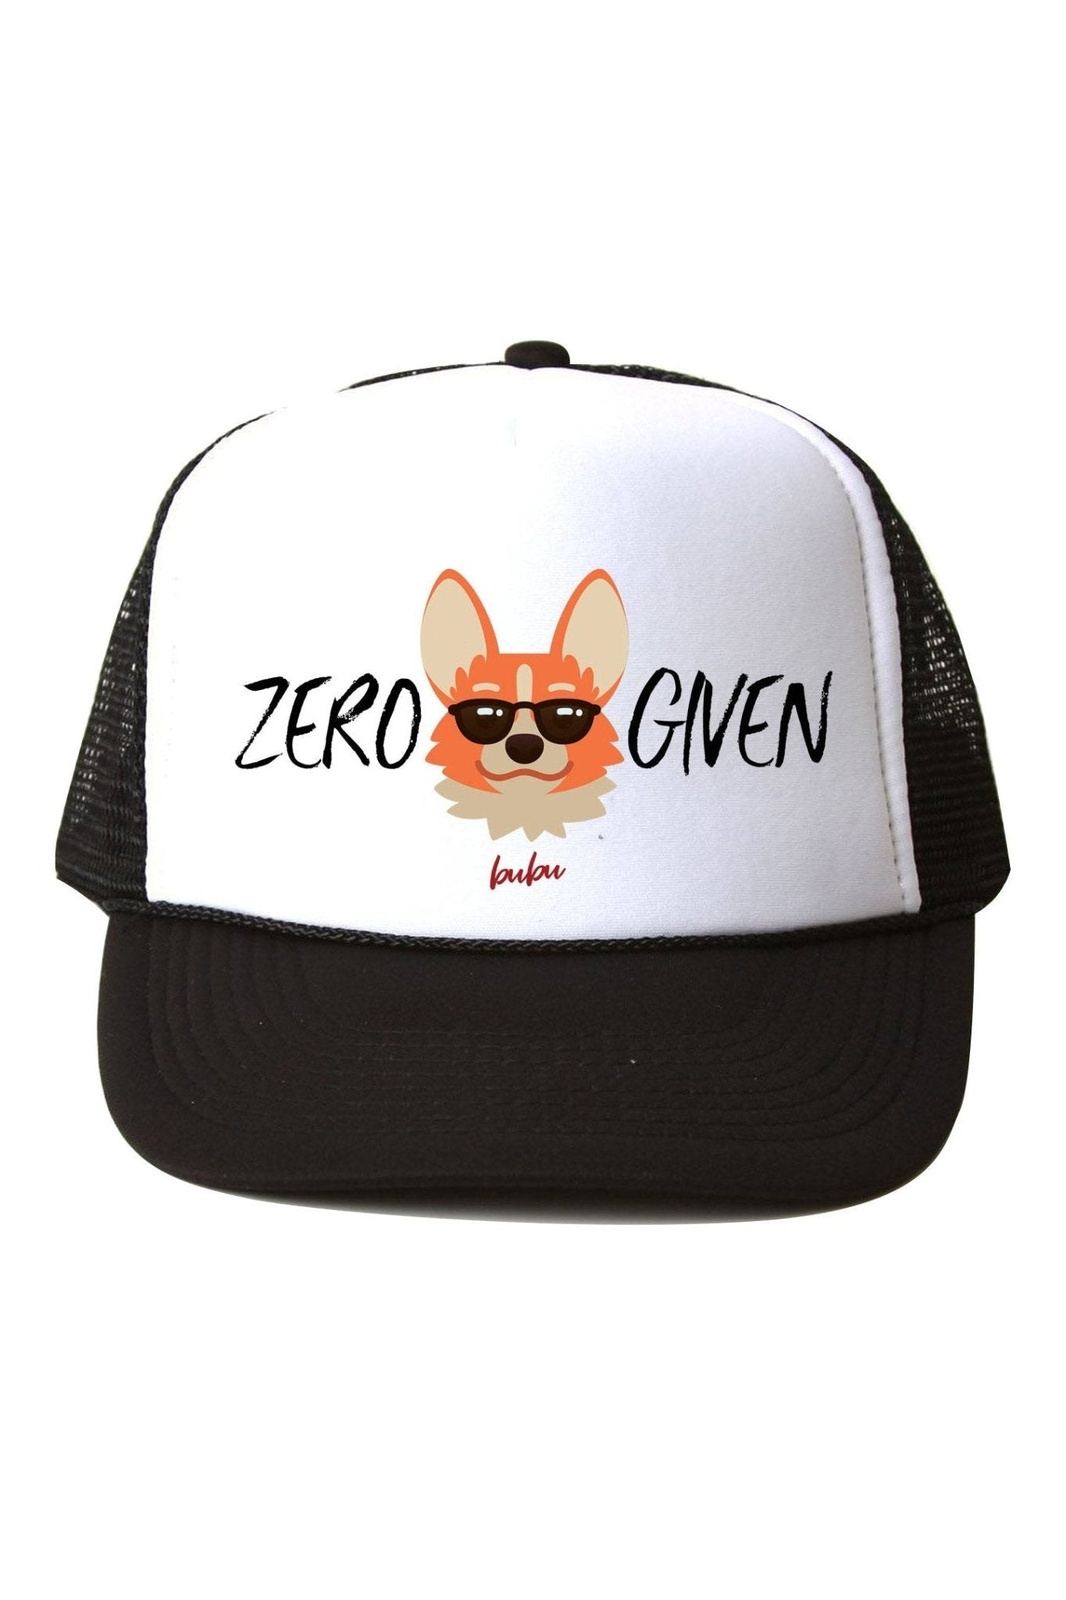 Zero Fox Given Trucker Hat - Tea for Three: A Children's Boutique-New Arrivals-TheT43Shop